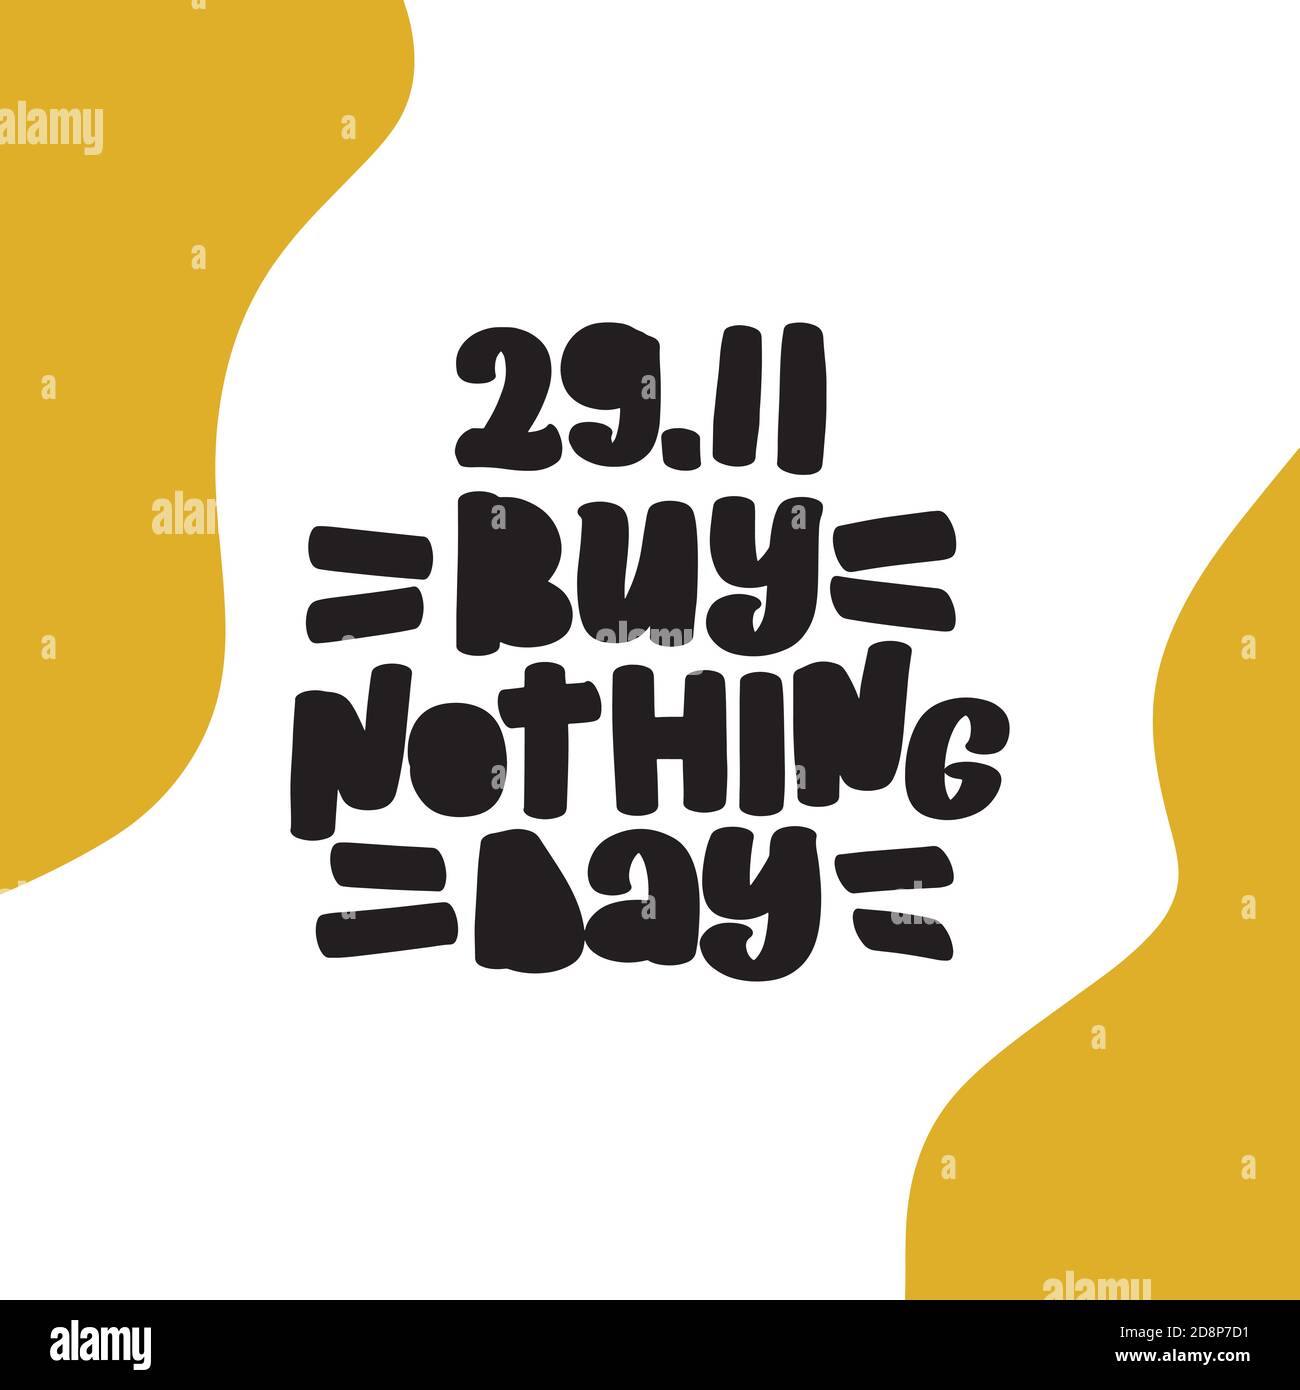 Buy Nothing Day 29 November vector stock illustration Stock Vector